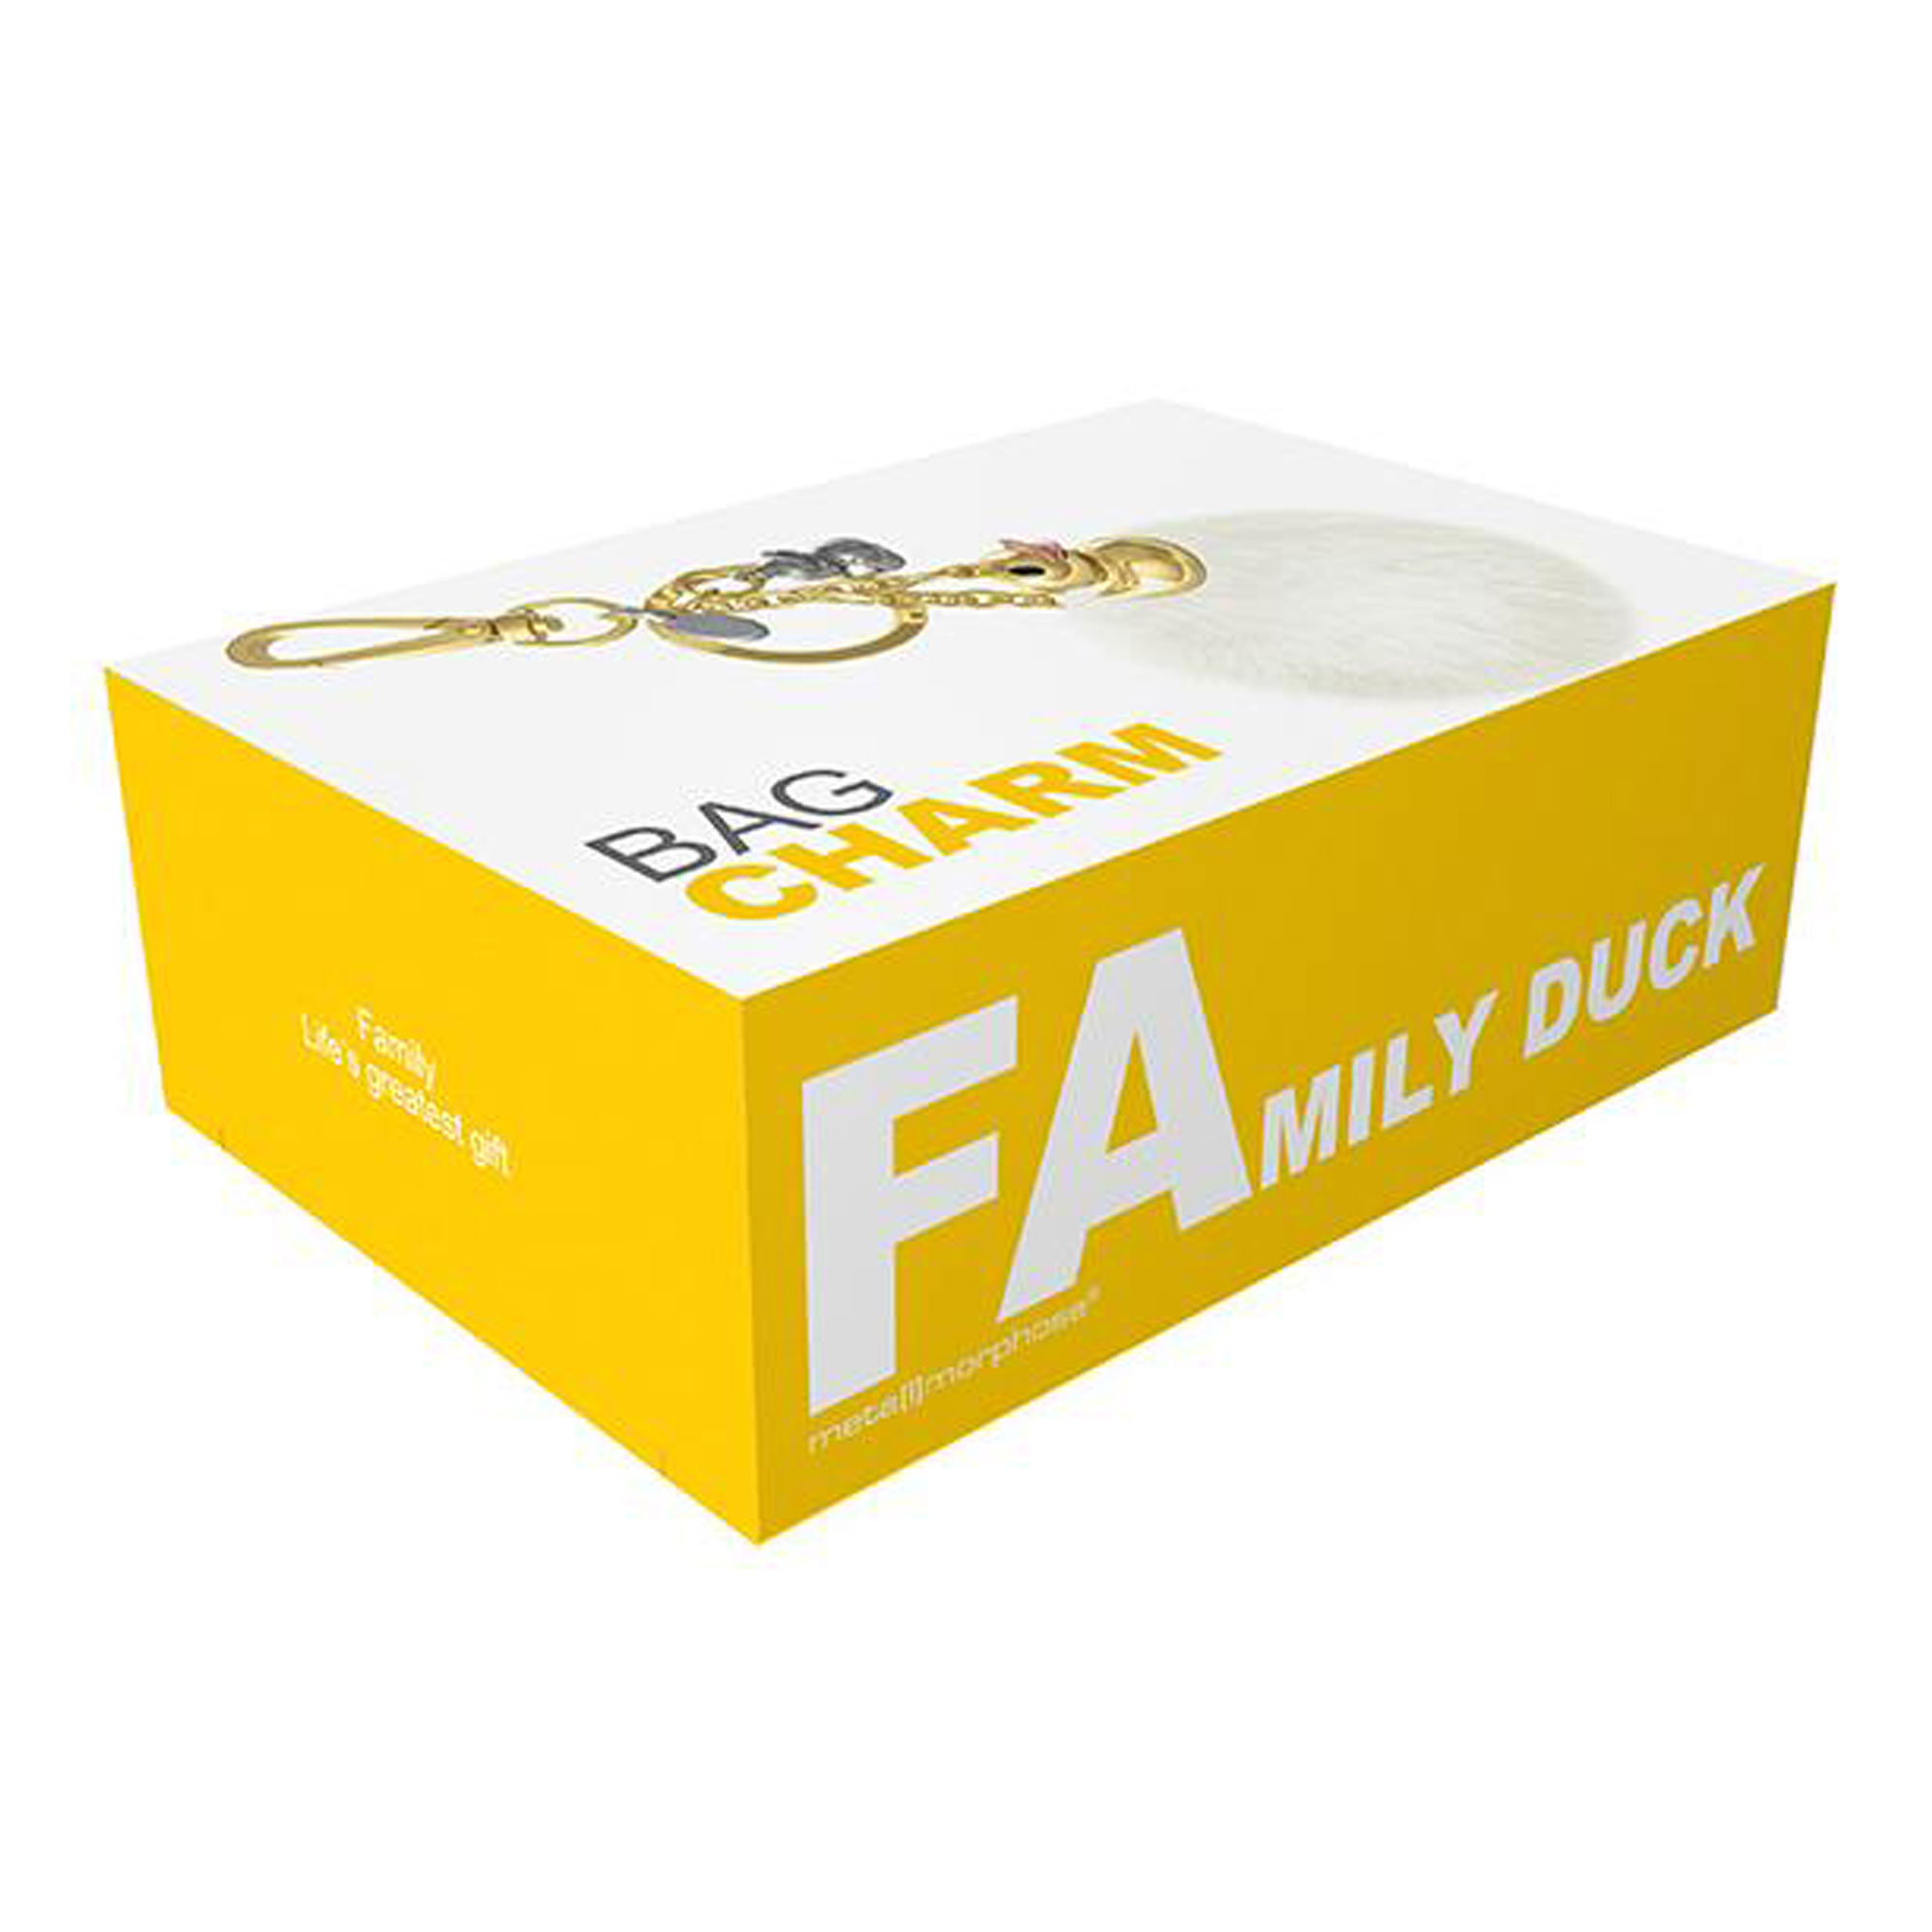 Taschenanhänger Family Duck Verpackung